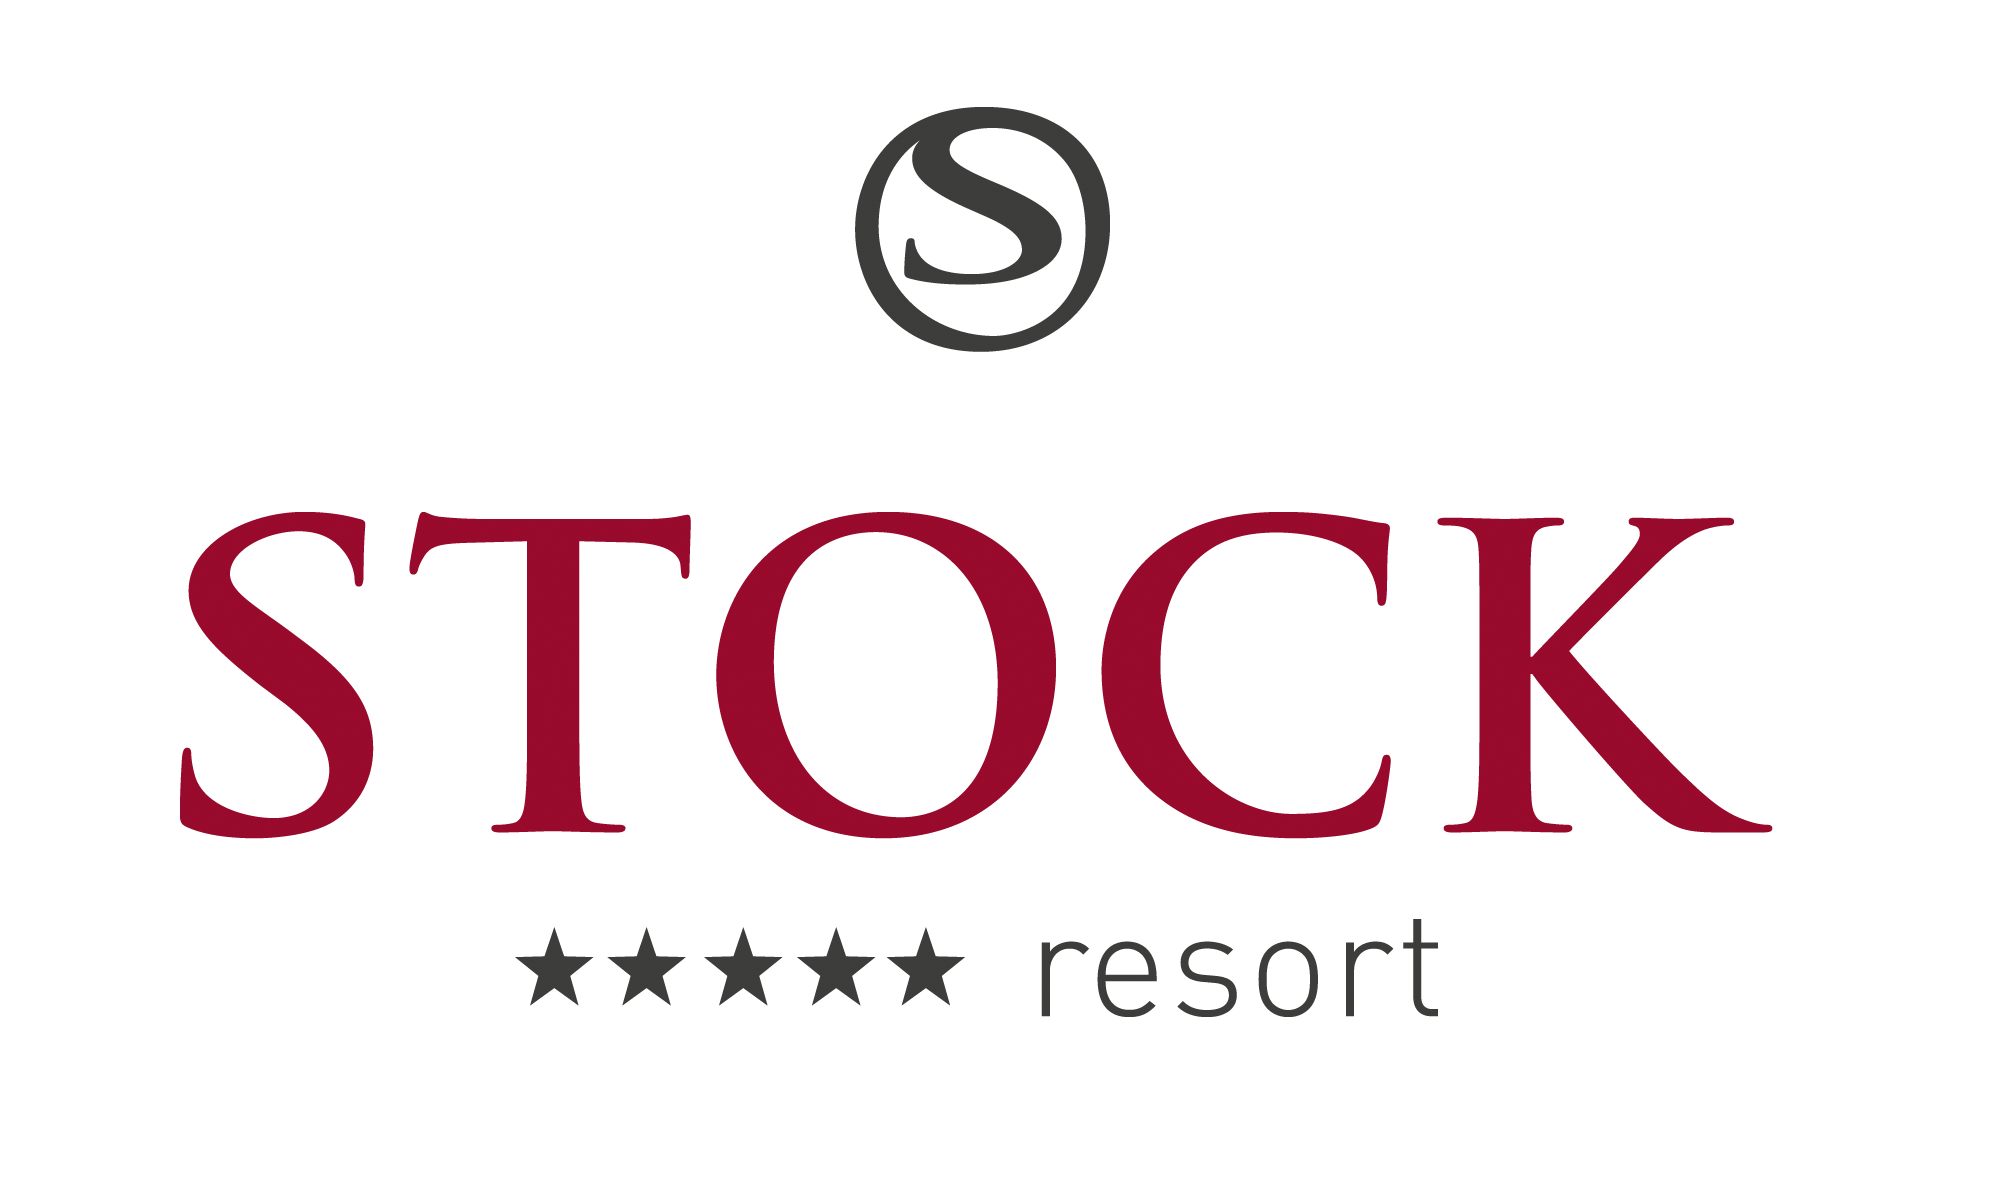 STOCK***** resort  Logo